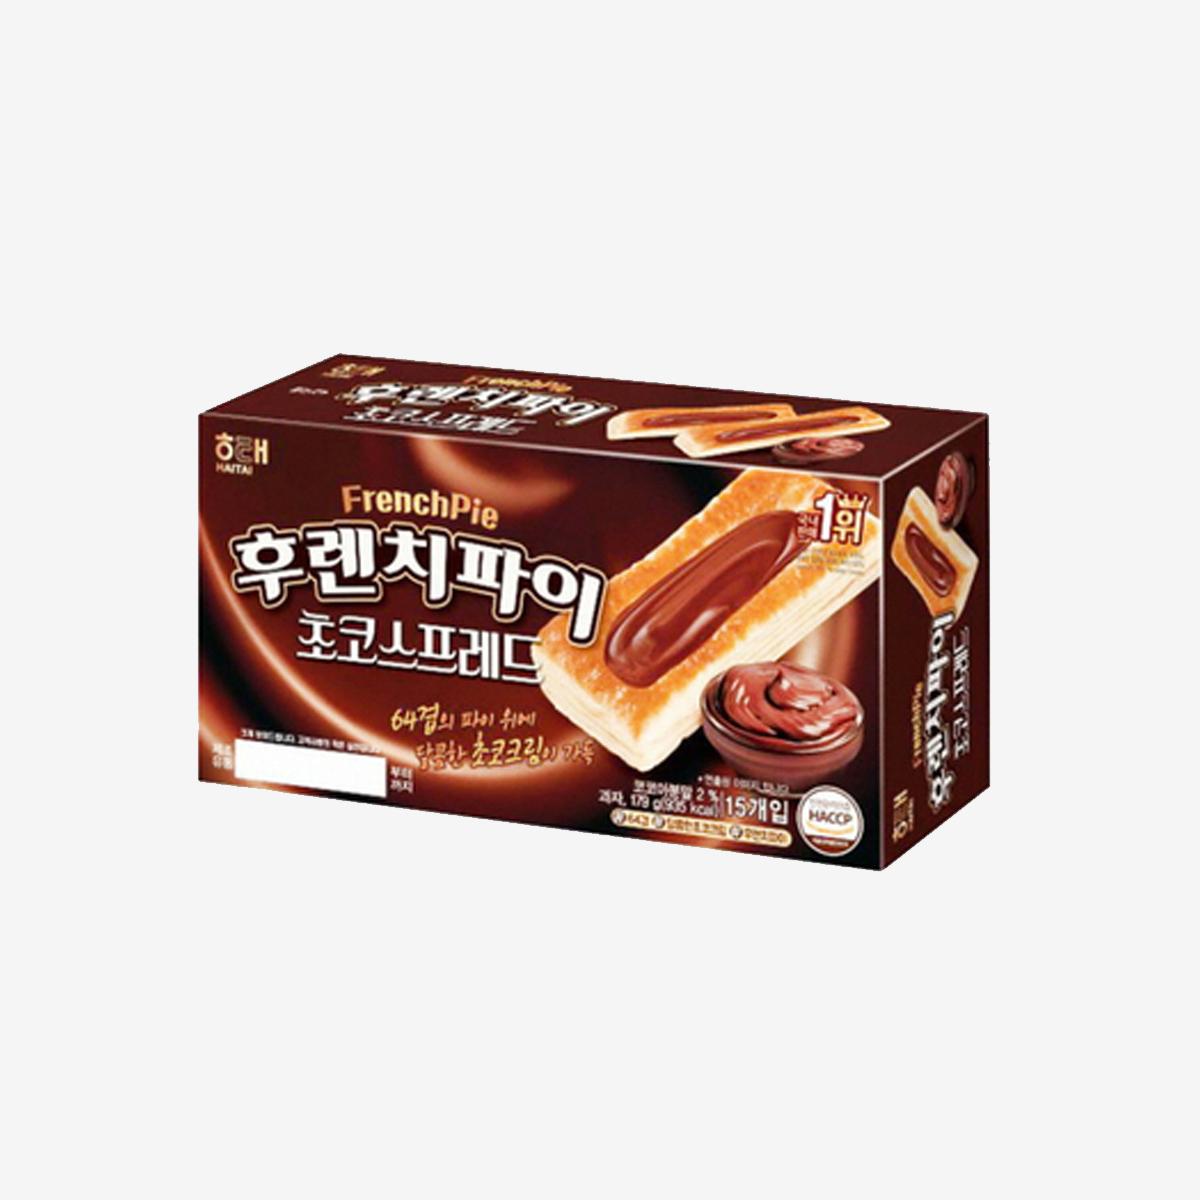 korean brand haitai's chocolate flavor french pie in brown box